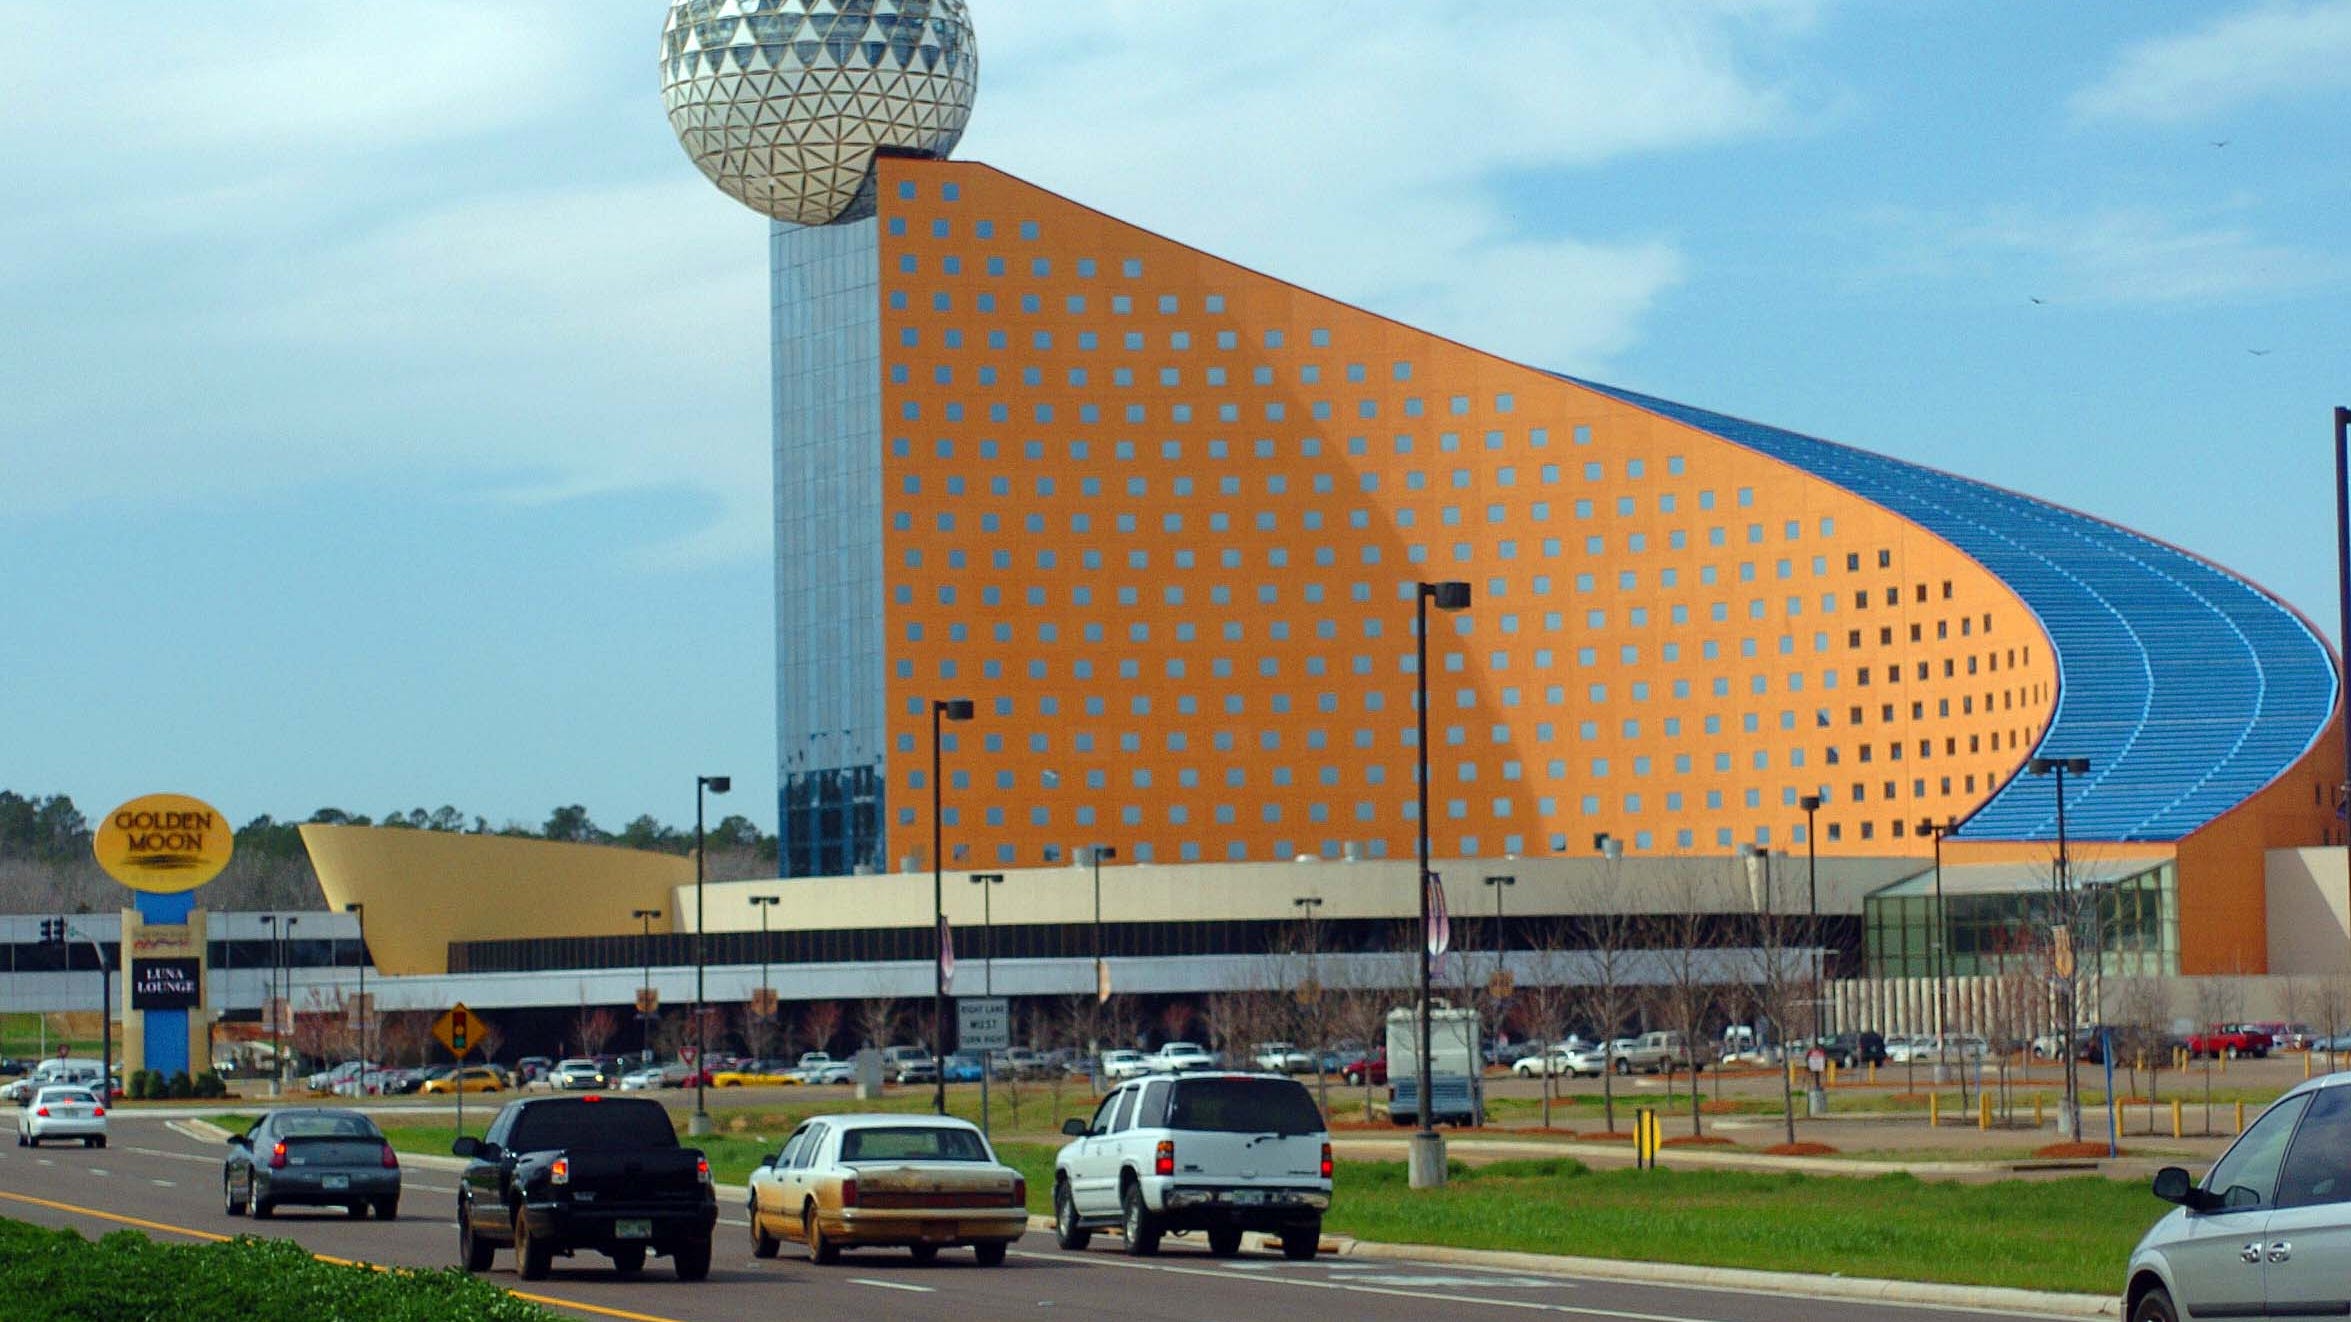 choctaw casino stigler 500 nations